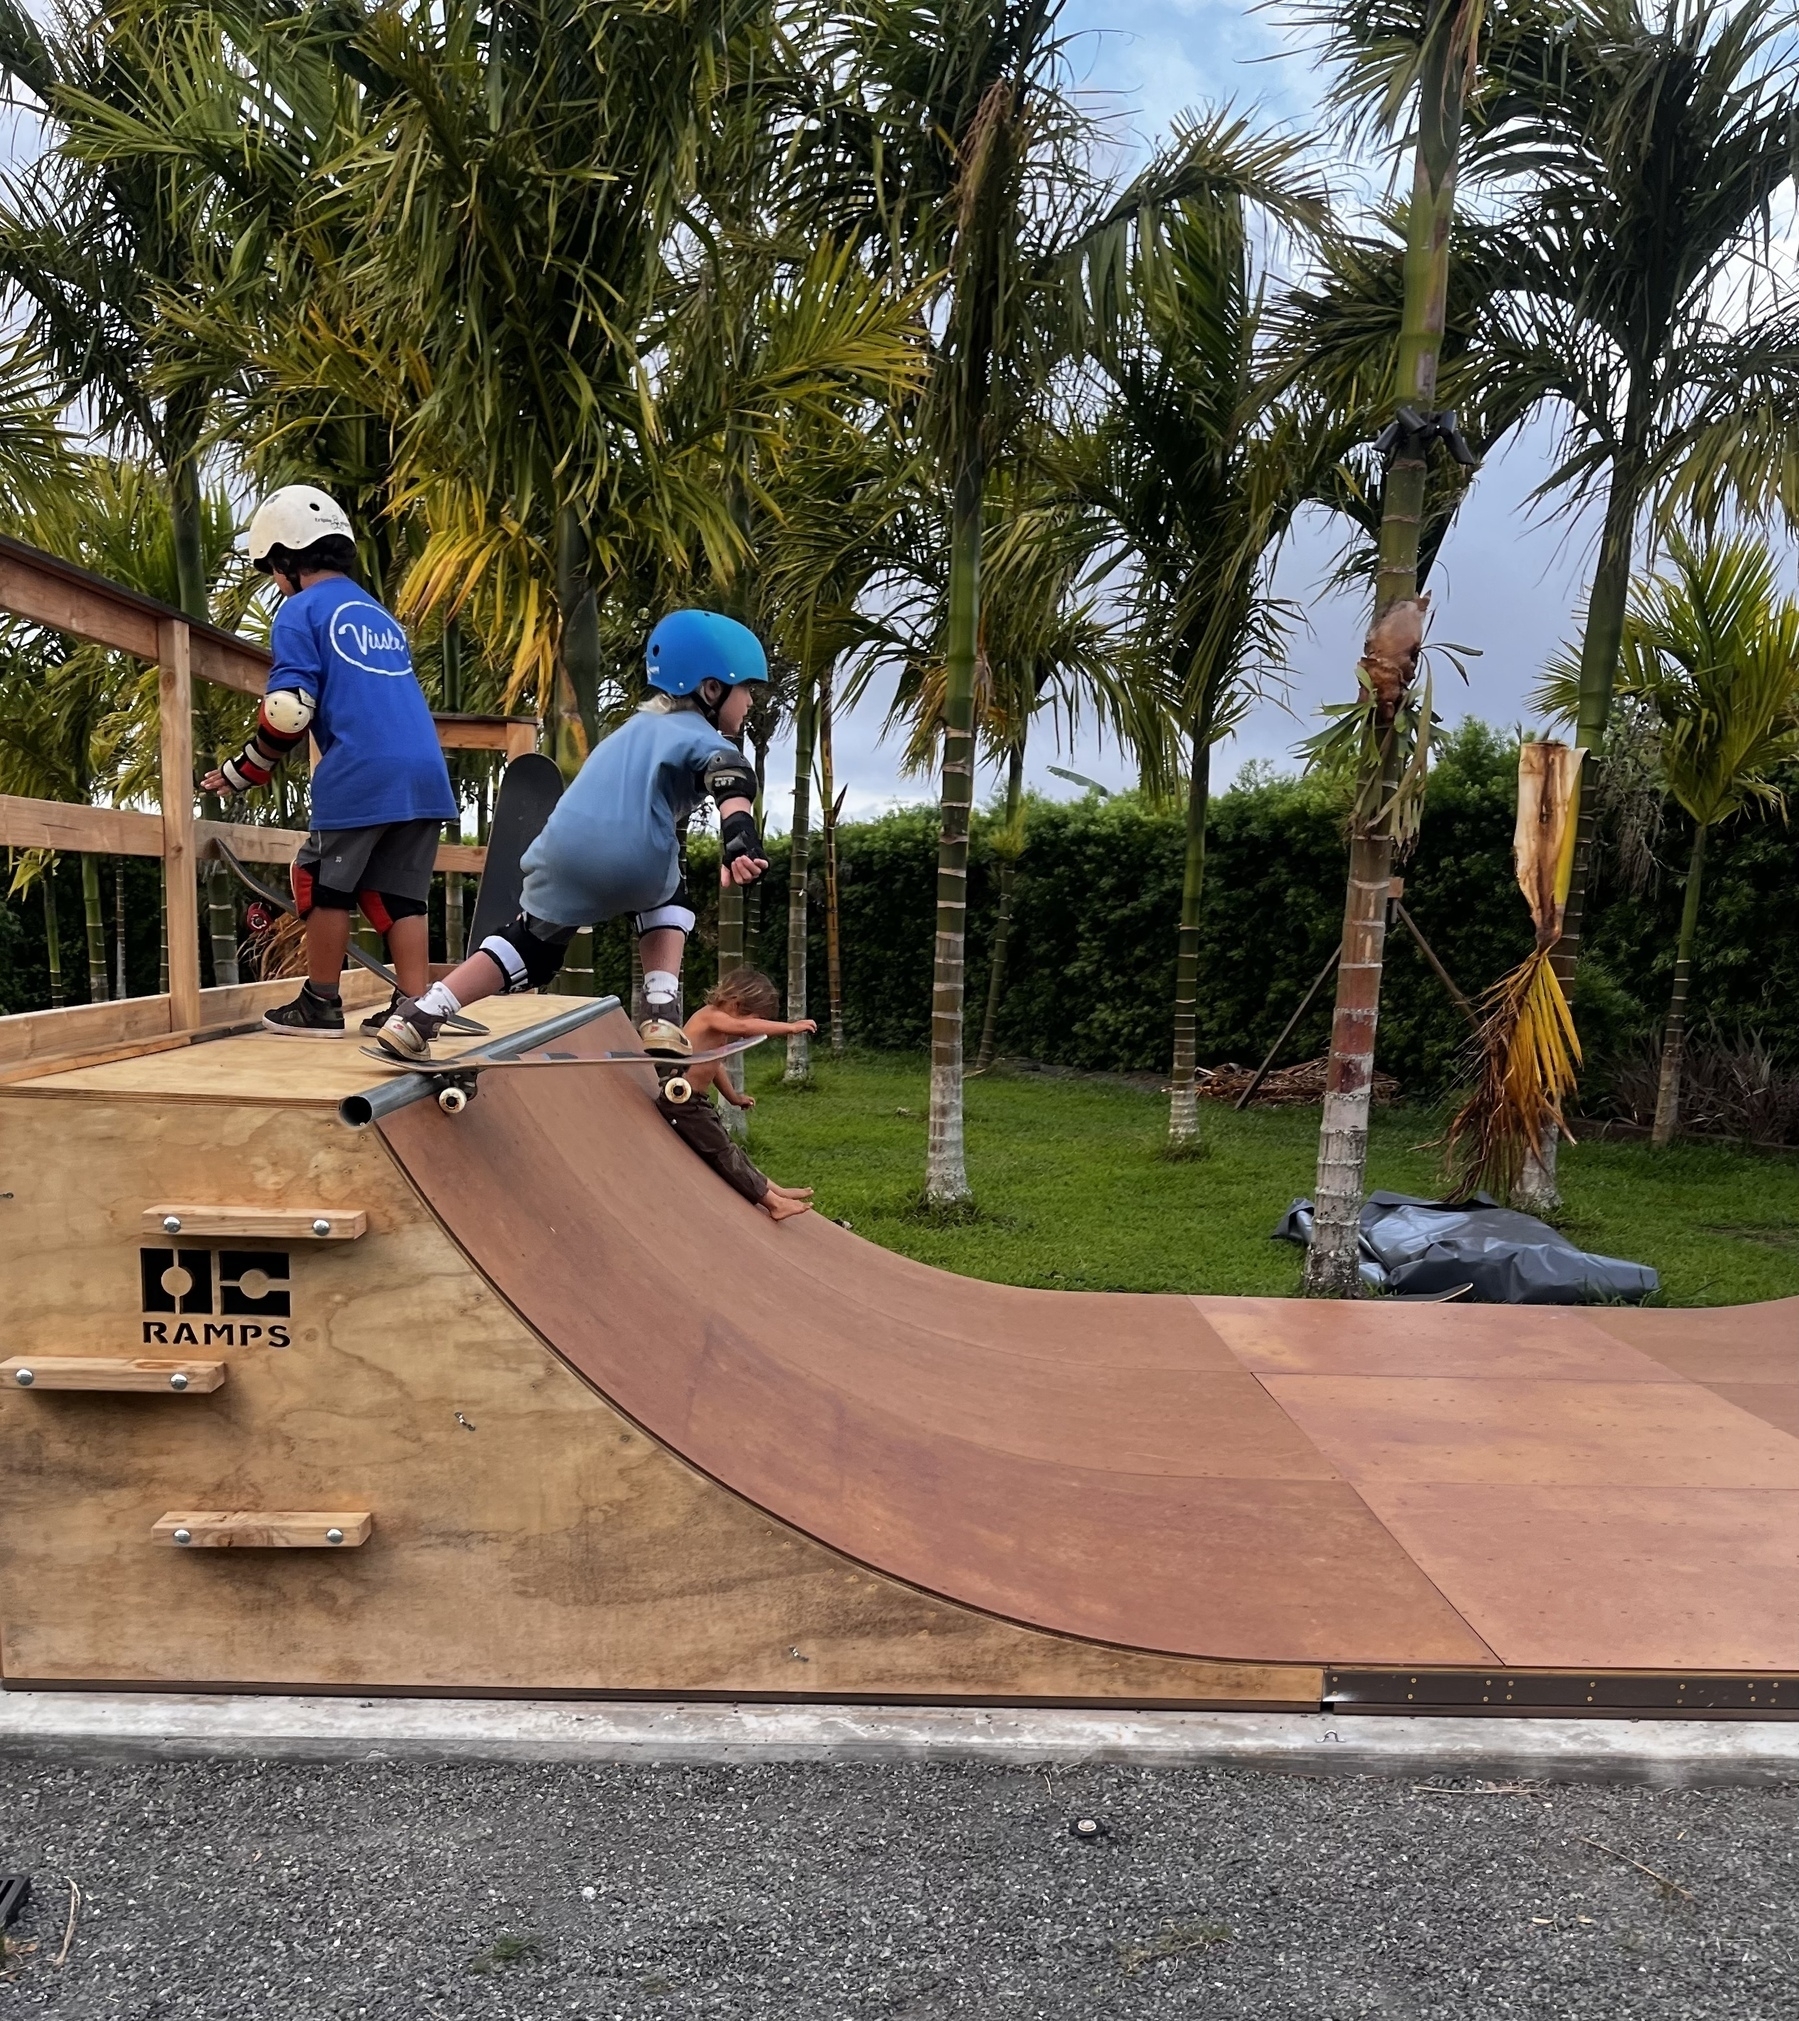 Kids on a skateboard half pipe